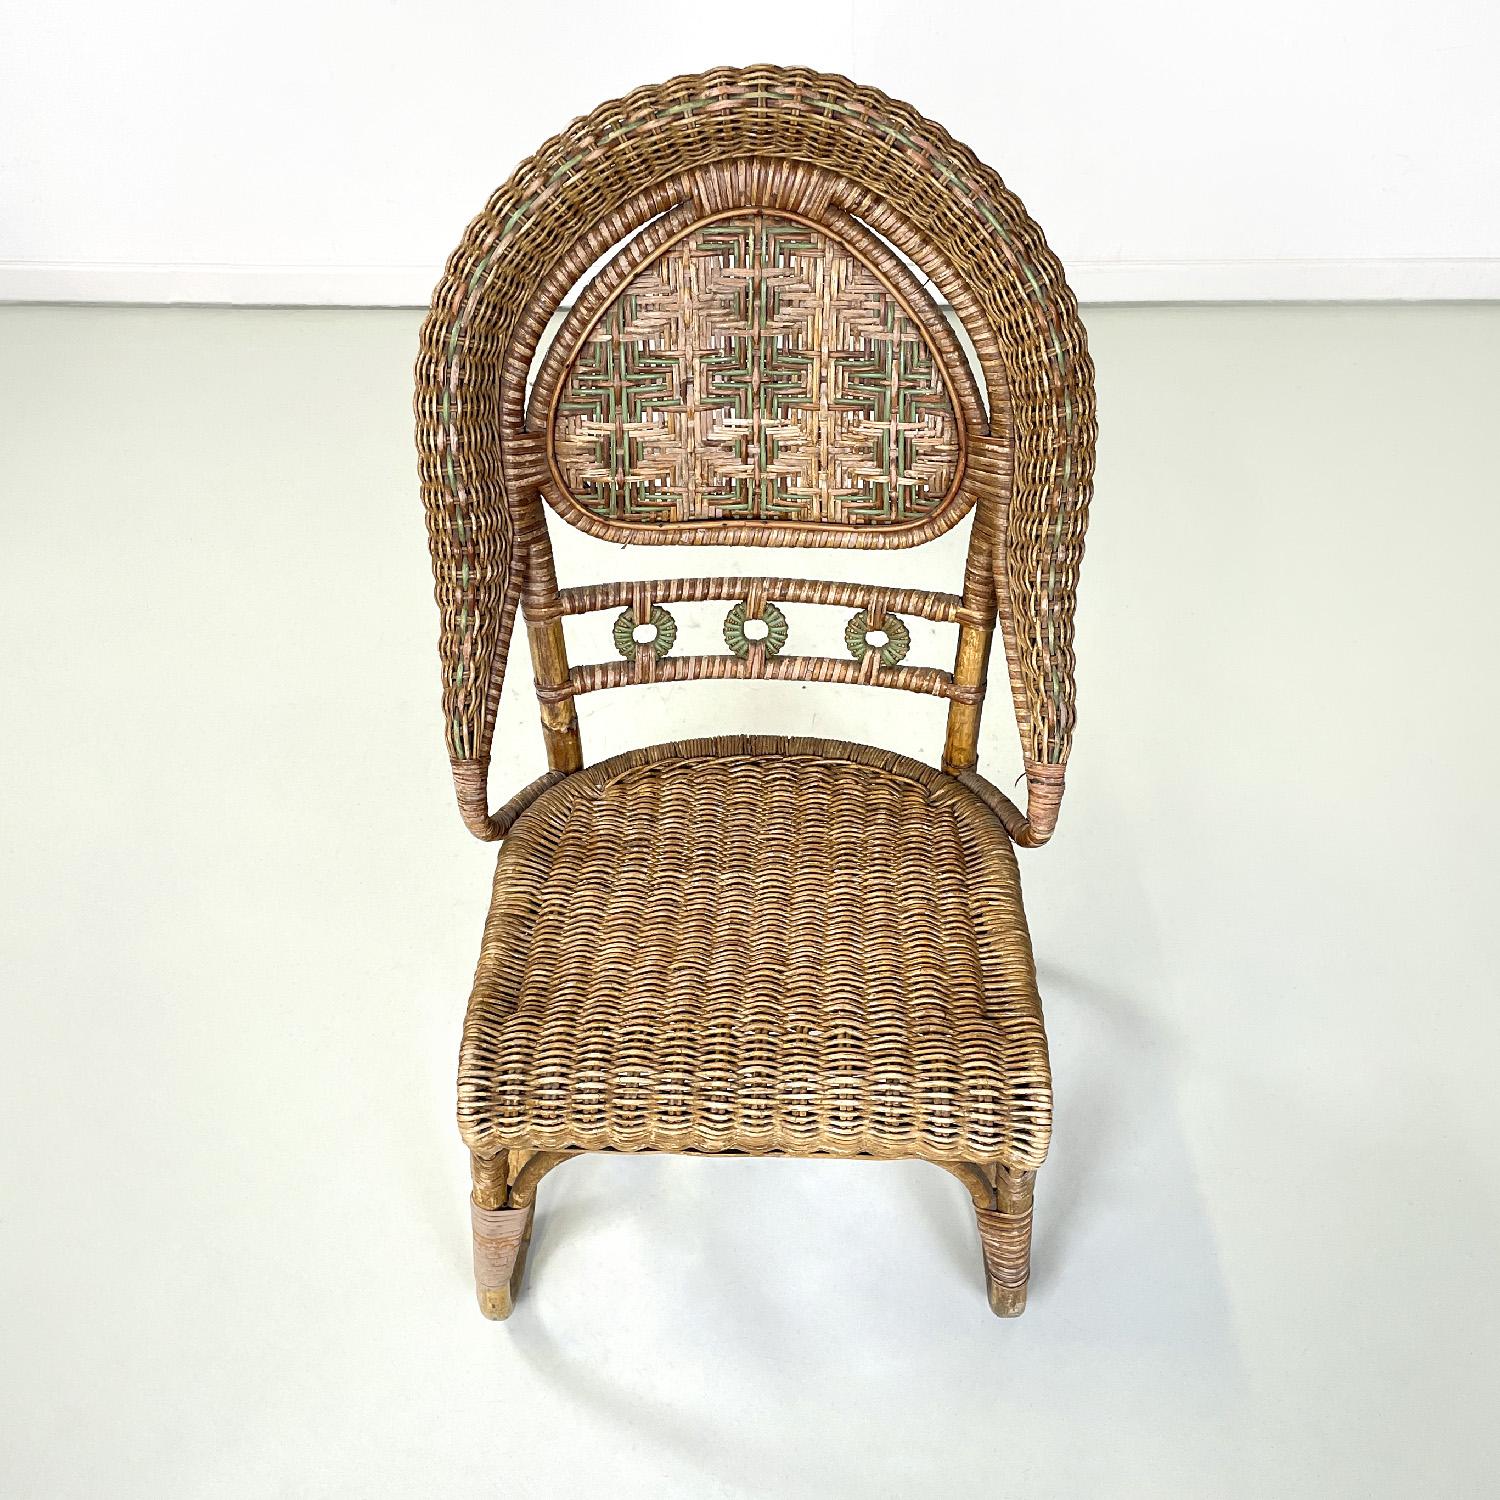 Italiana antique rattan chairs by Mongiardino and Bonacina for Bonacina, 1900s For Sale 3